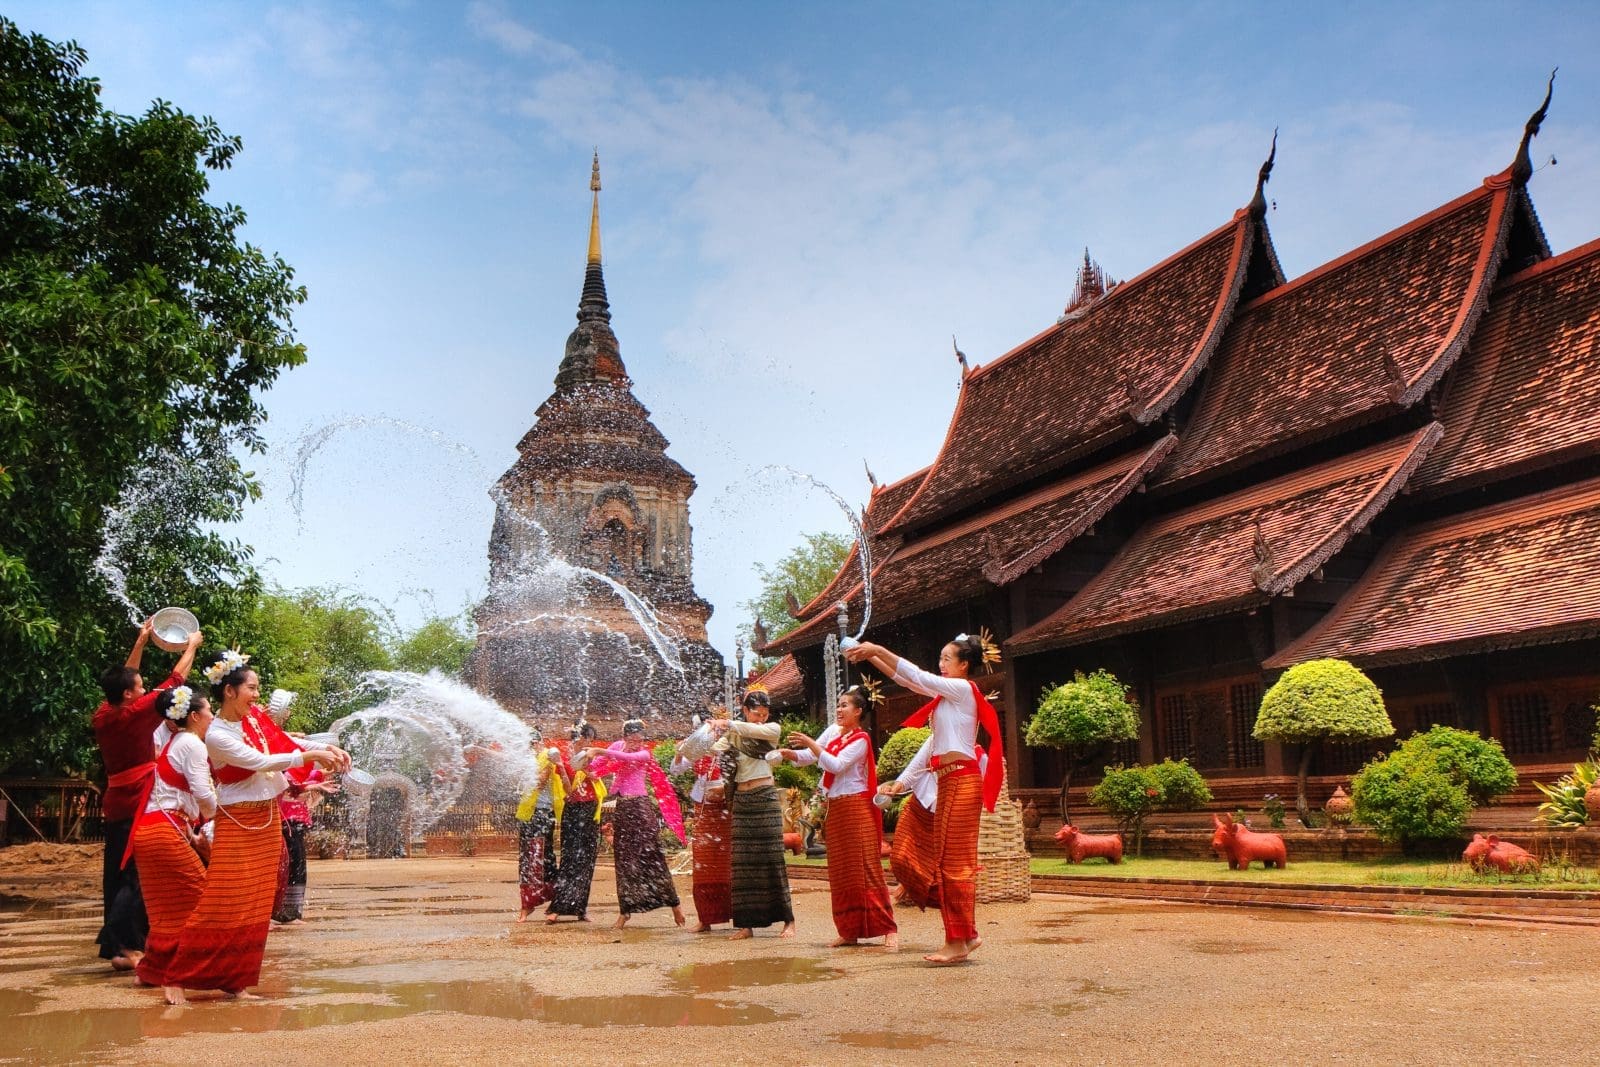 Songkran, Thailand Water Festival, 2022 - Travel Begins at 40